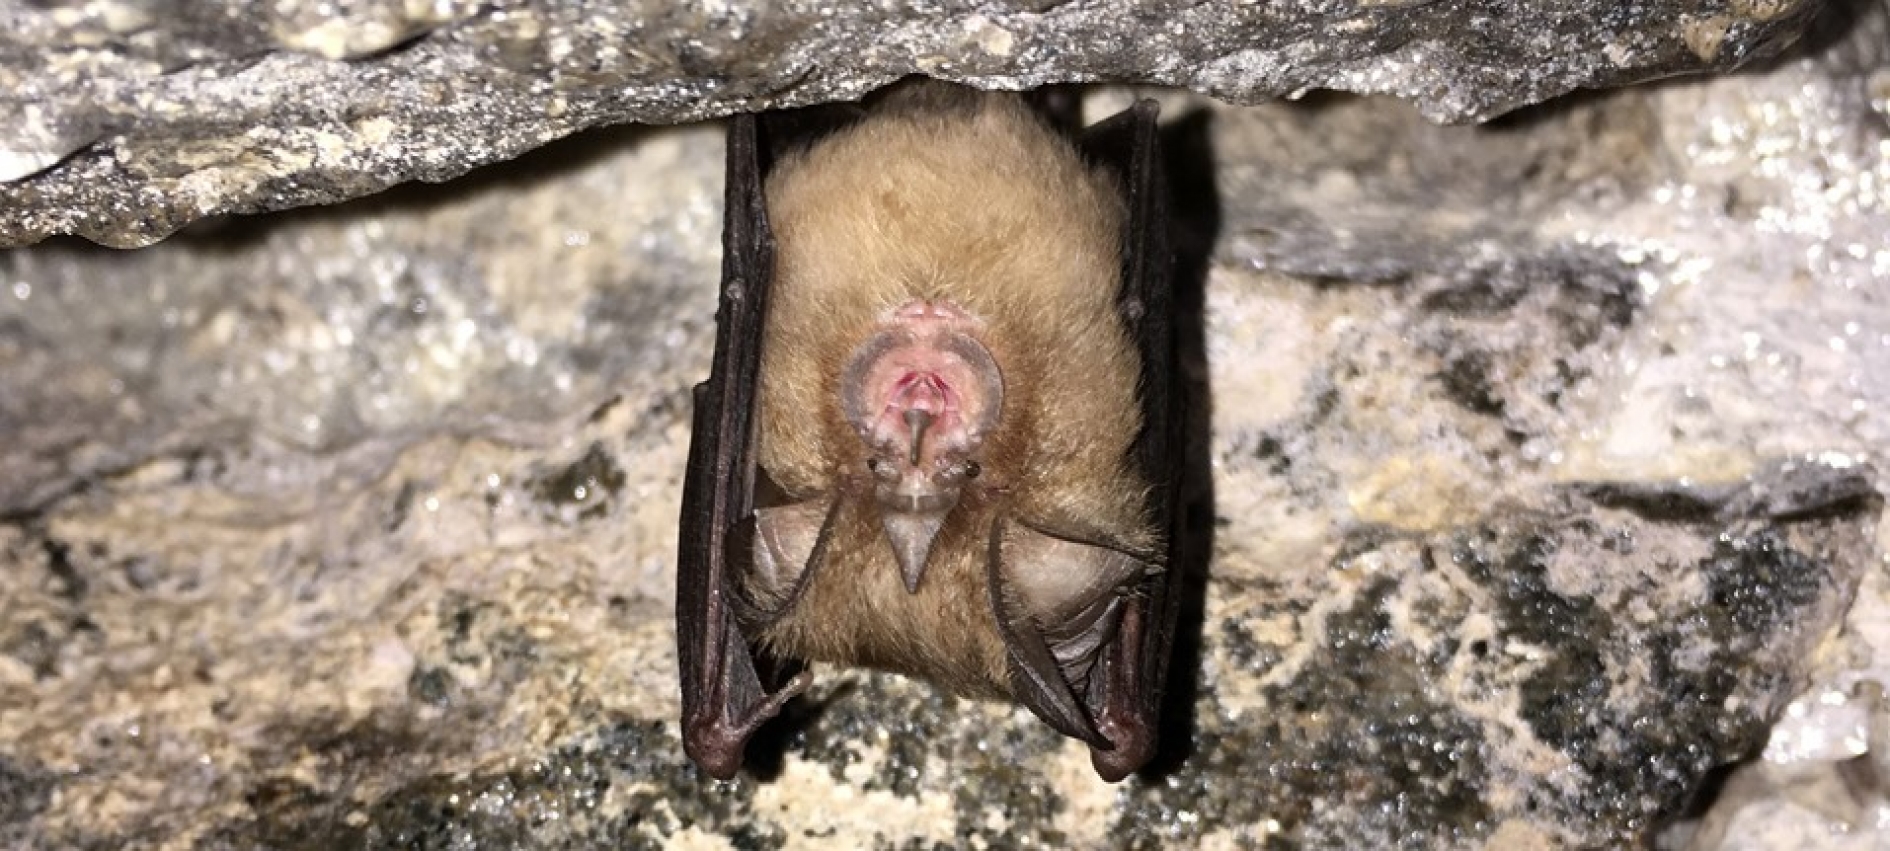 Bat Survey at Sintra Natural Park, Portugal